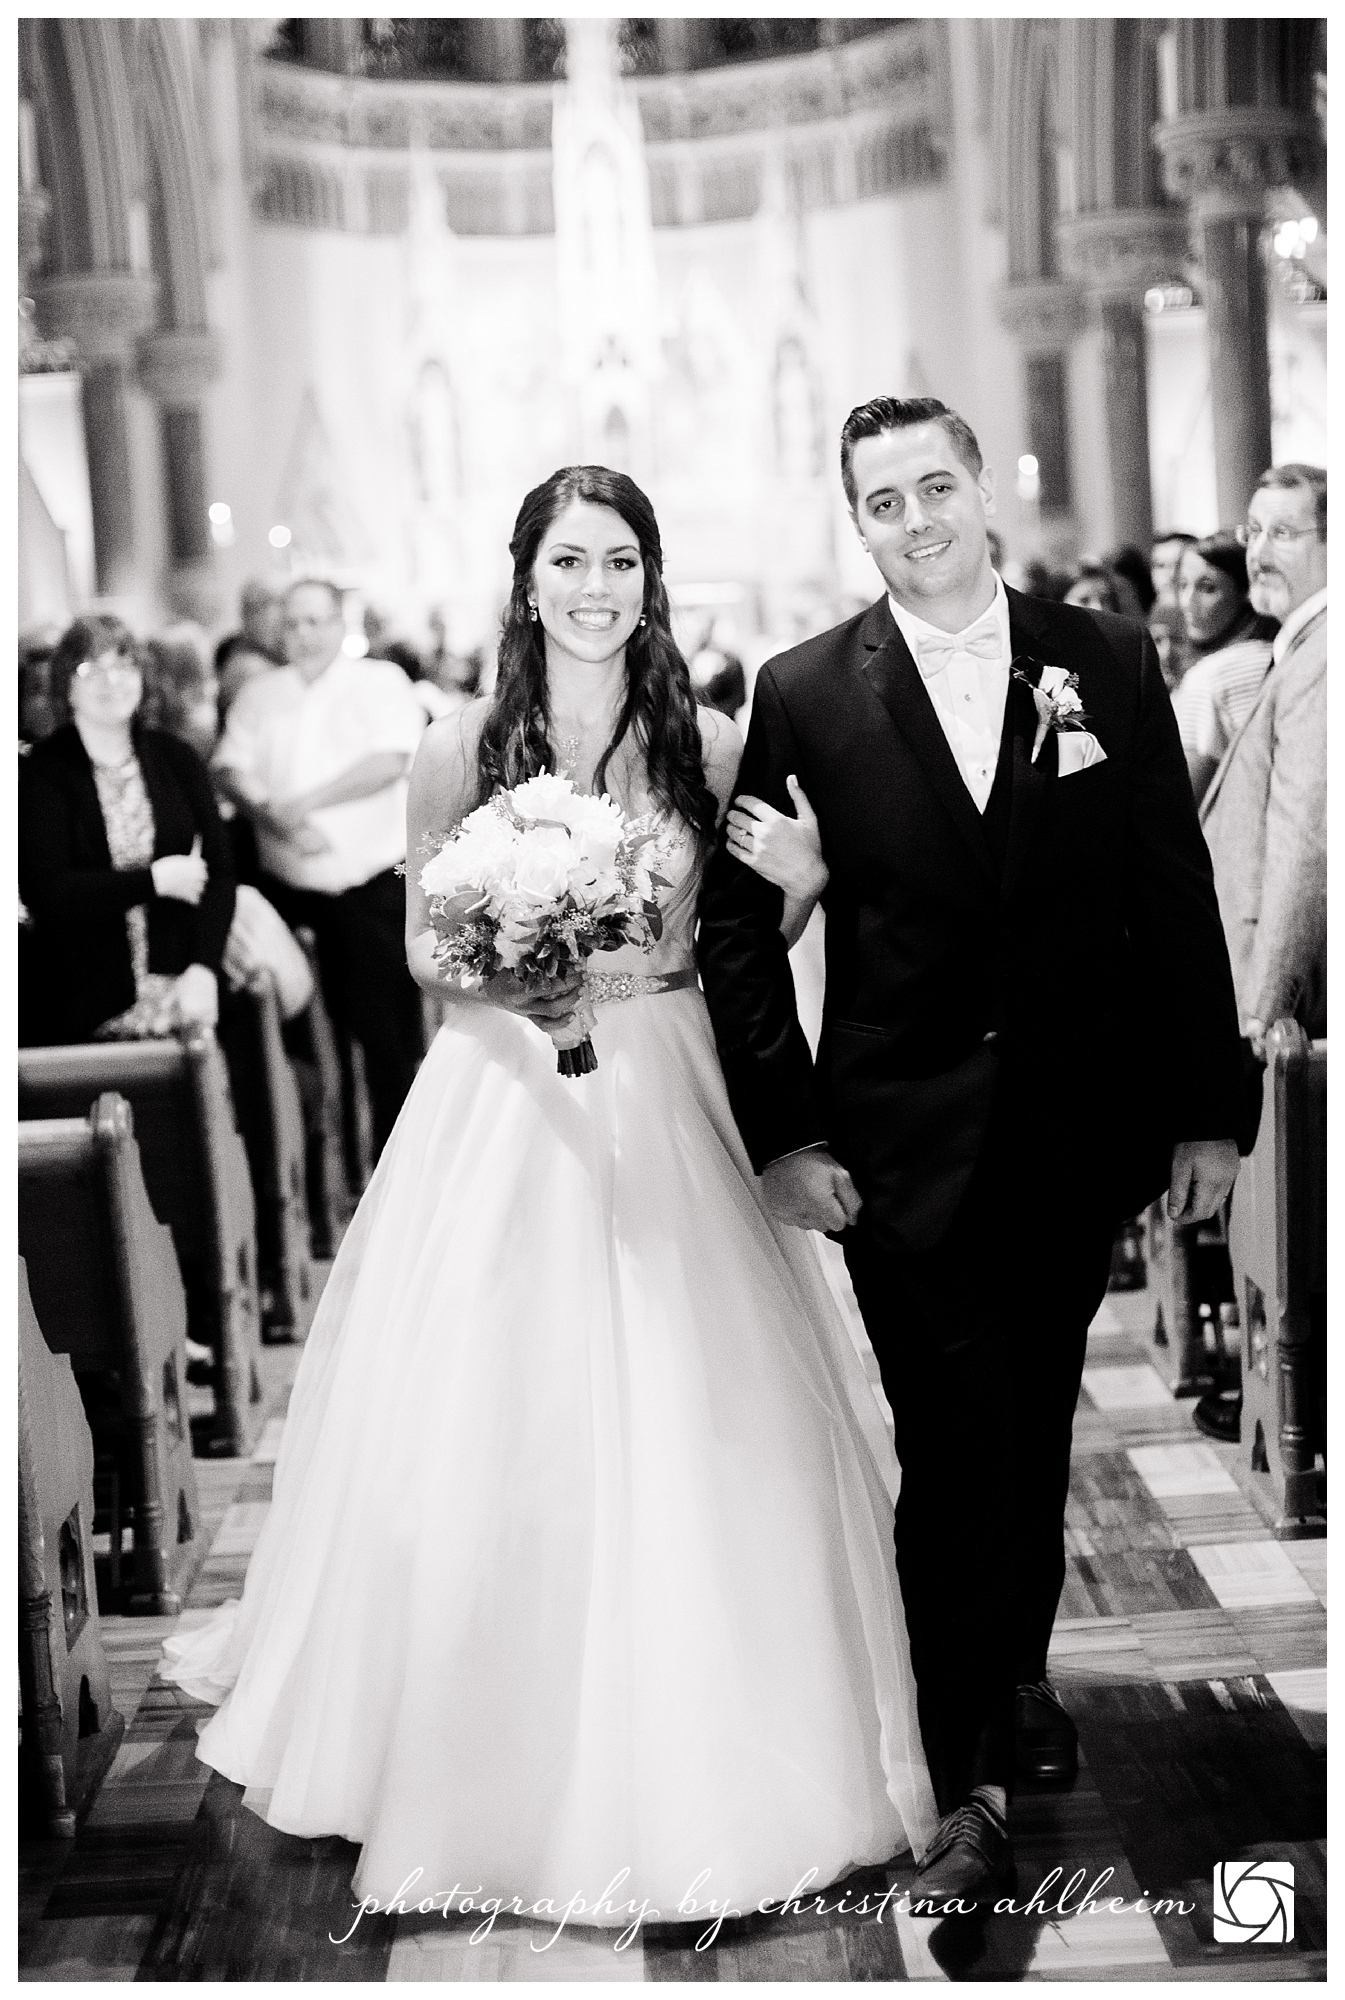 Allison + Jared | St Louis Wedding Photographer